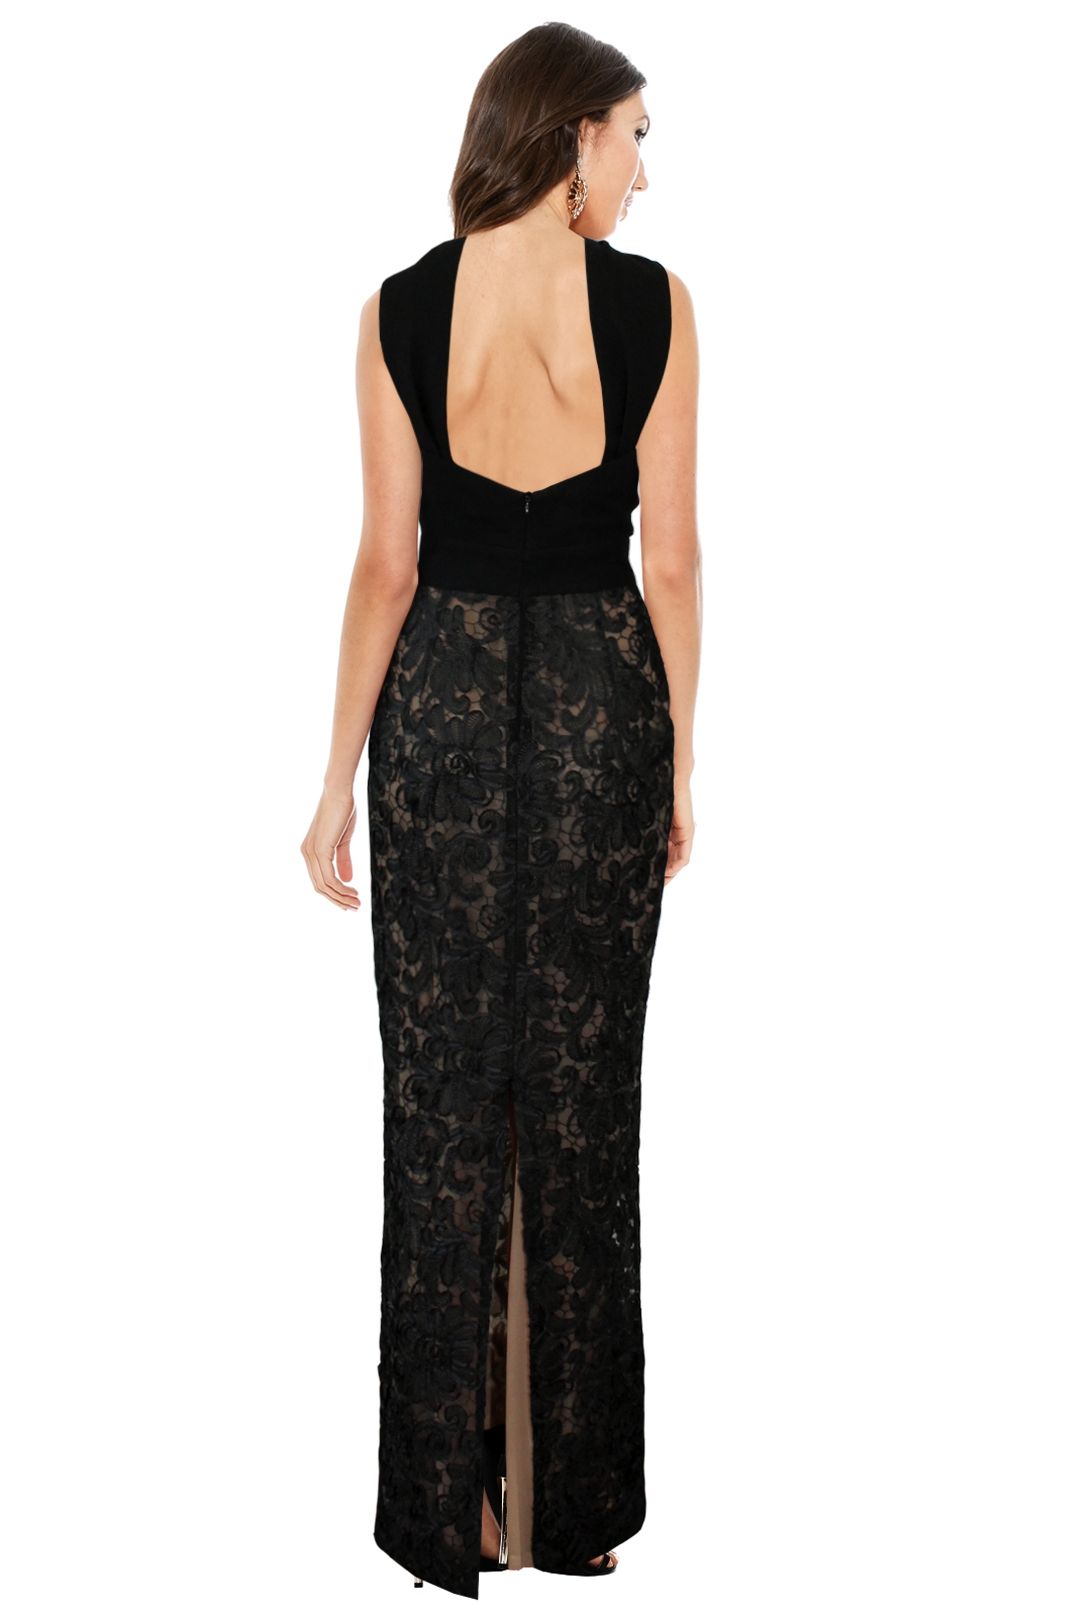 Lace Gown In Black By Carla Zampatti For Rent Glamcorner 